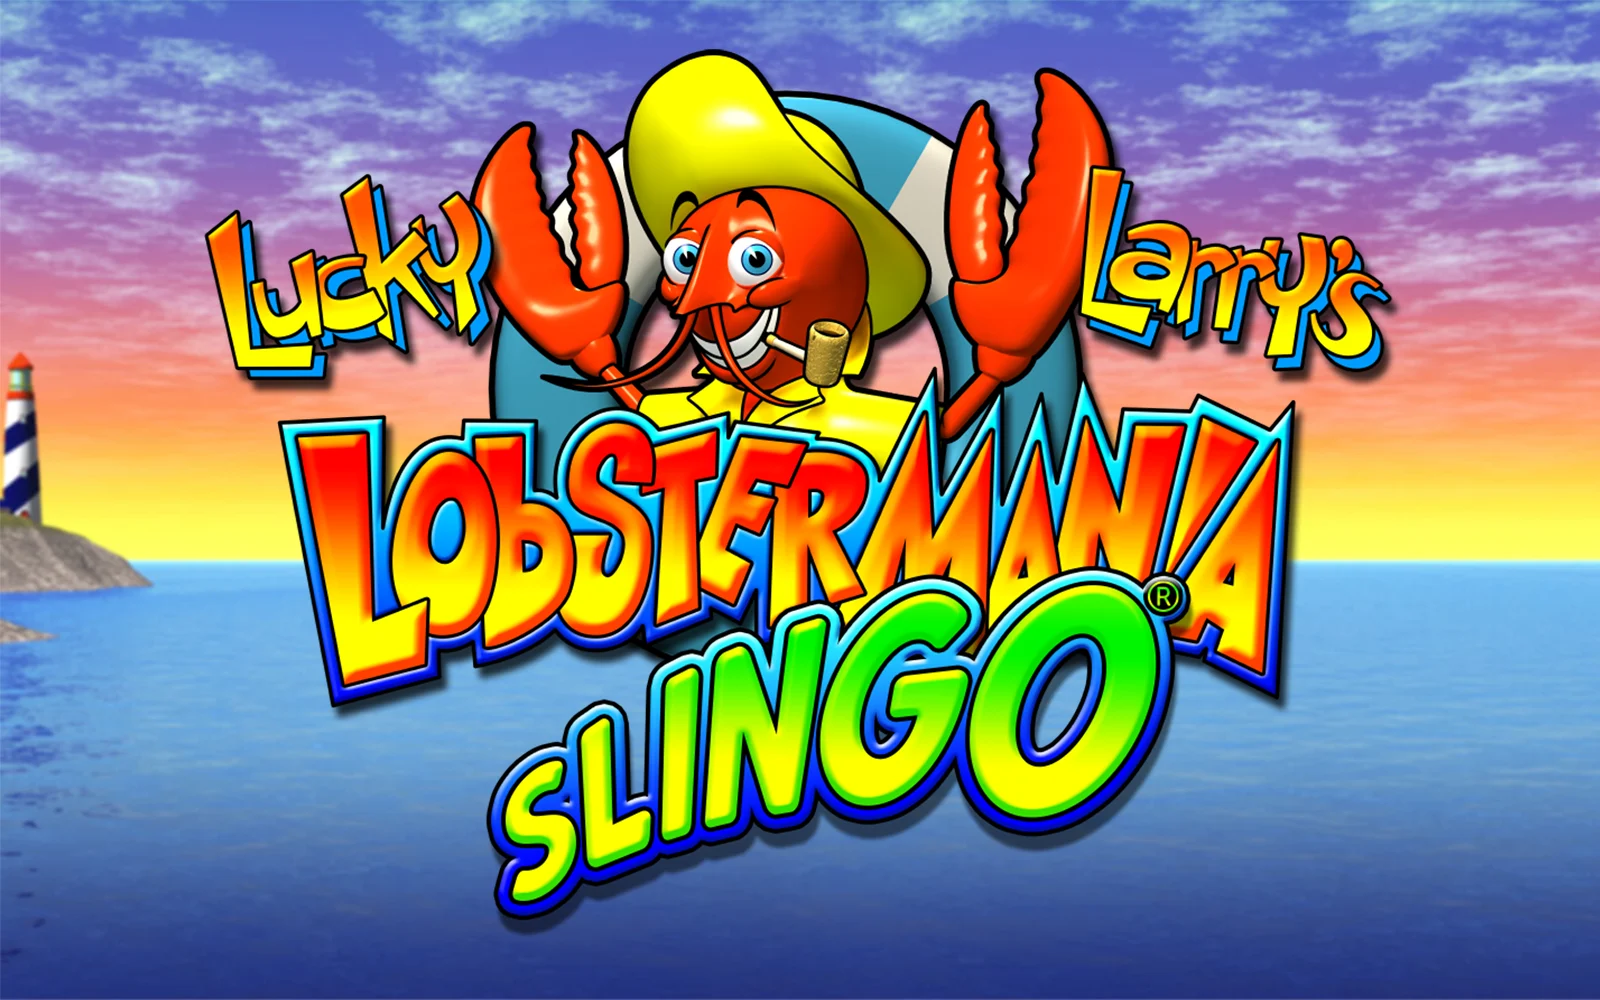 Gioca a Lucky Larry's Lobstermania Slingo sul casino online Starcasino.be